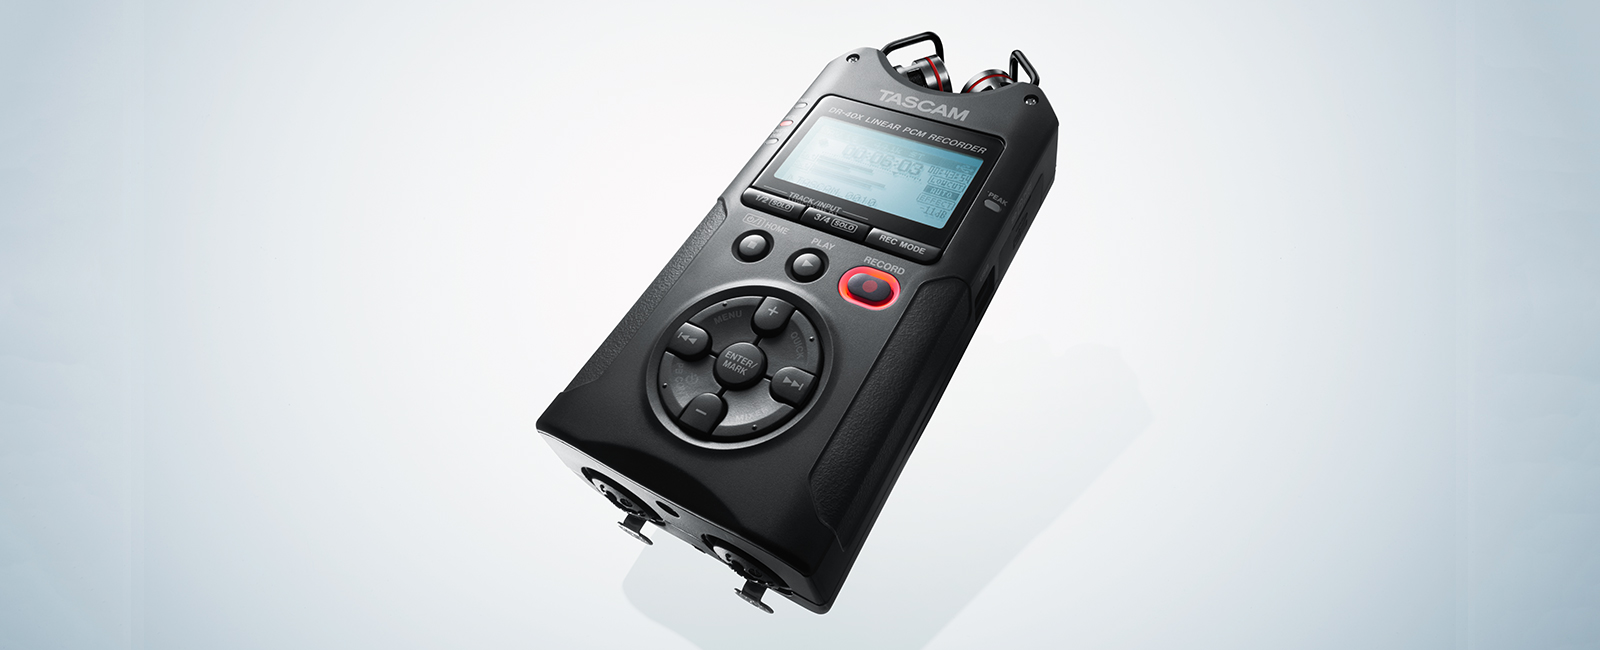 TASCAM Introduces Next Generation DR-X Series, Digital Audio 